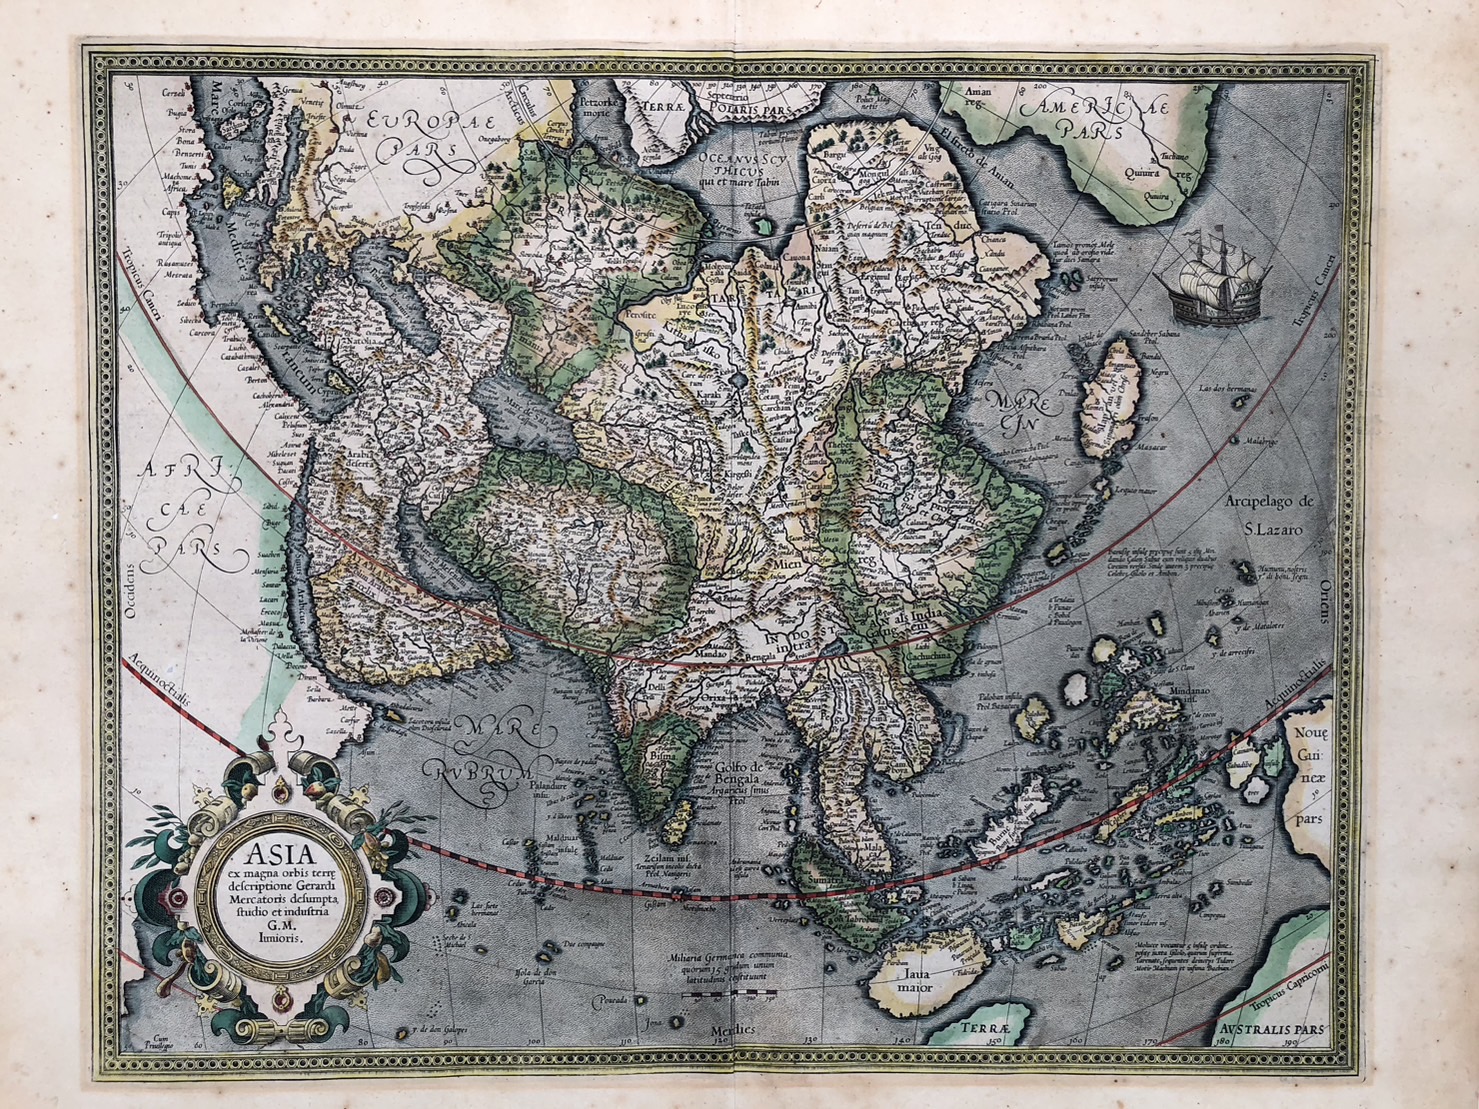 Indiae Orientalis - Old Maps and Prints, Bangkok, Thailand